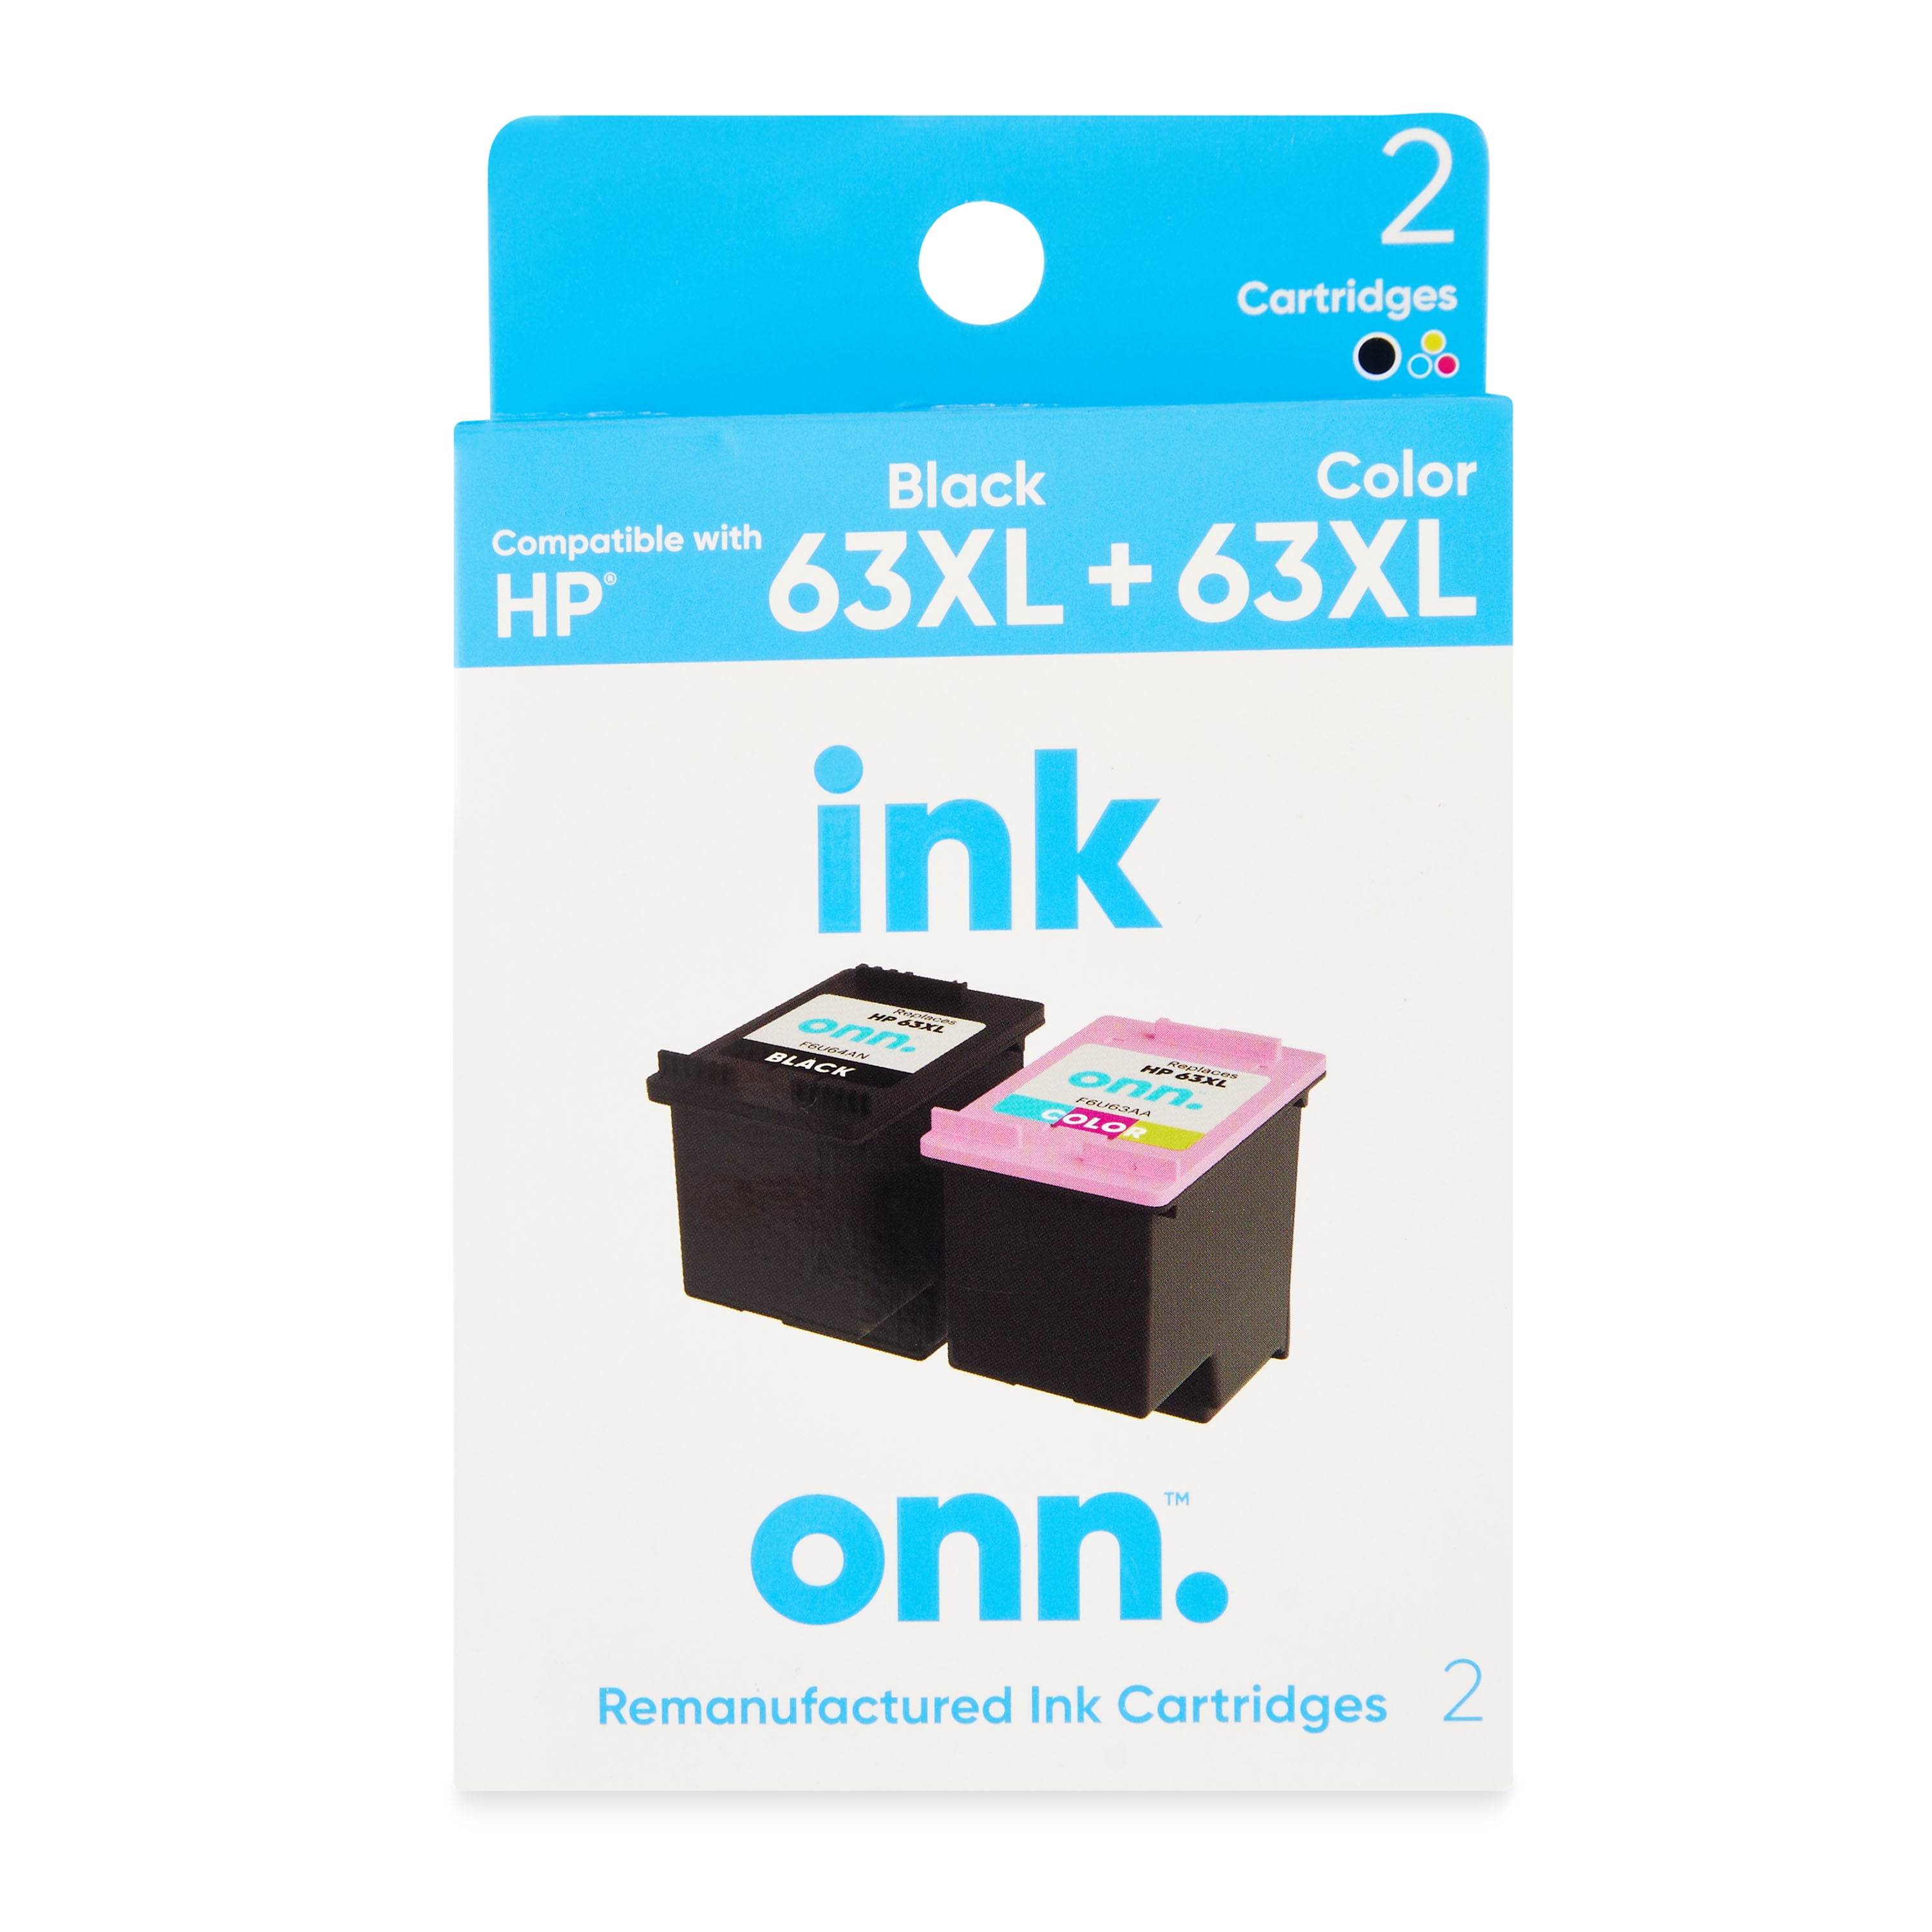 onn. Remanufactured Ink Cartridge, HP 63XL Black, 2 Cartridges - Walmart.com